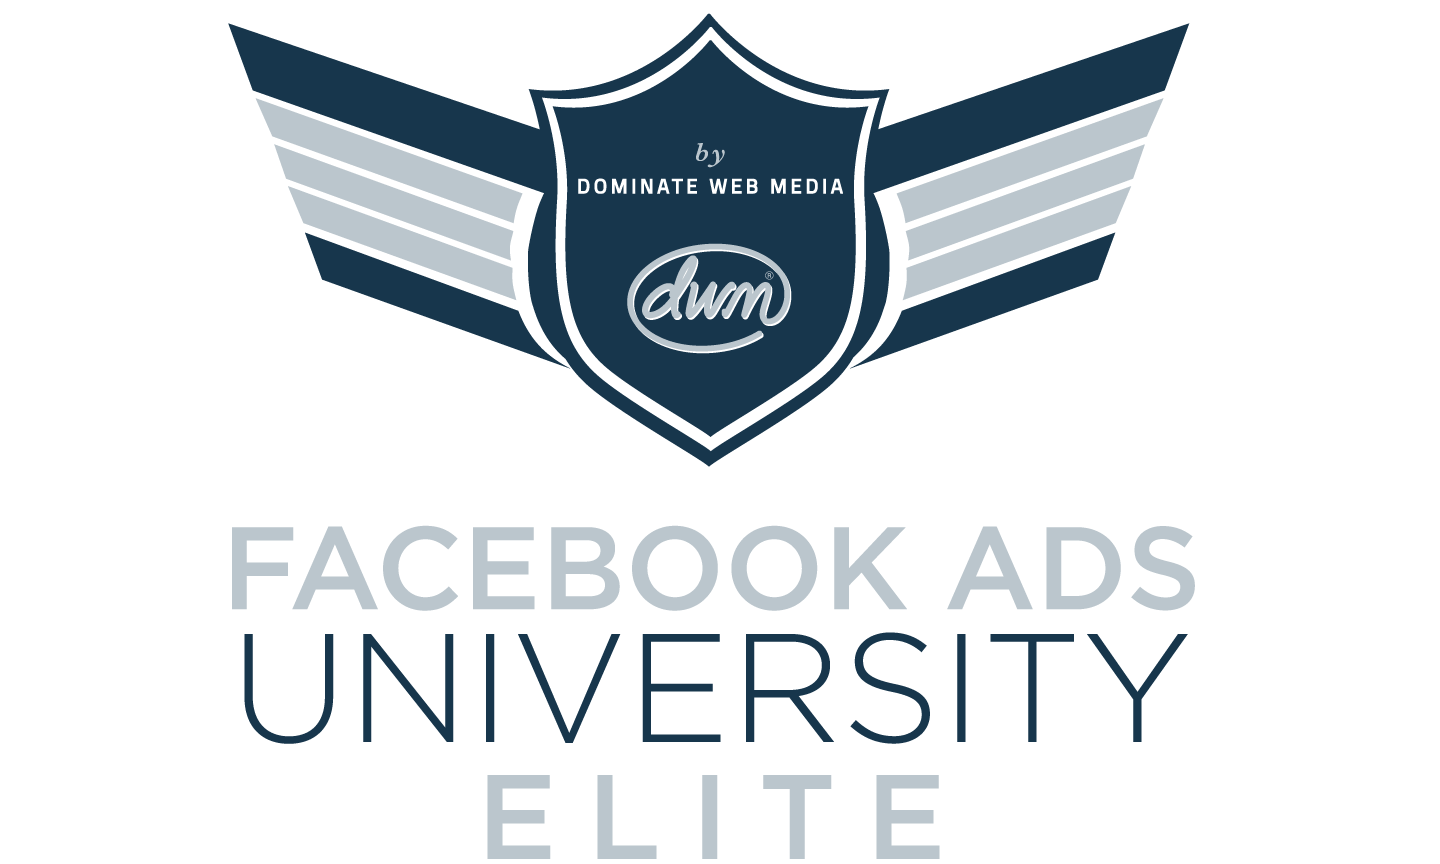 Keith Krance – Facebook Ads University Elite 2019